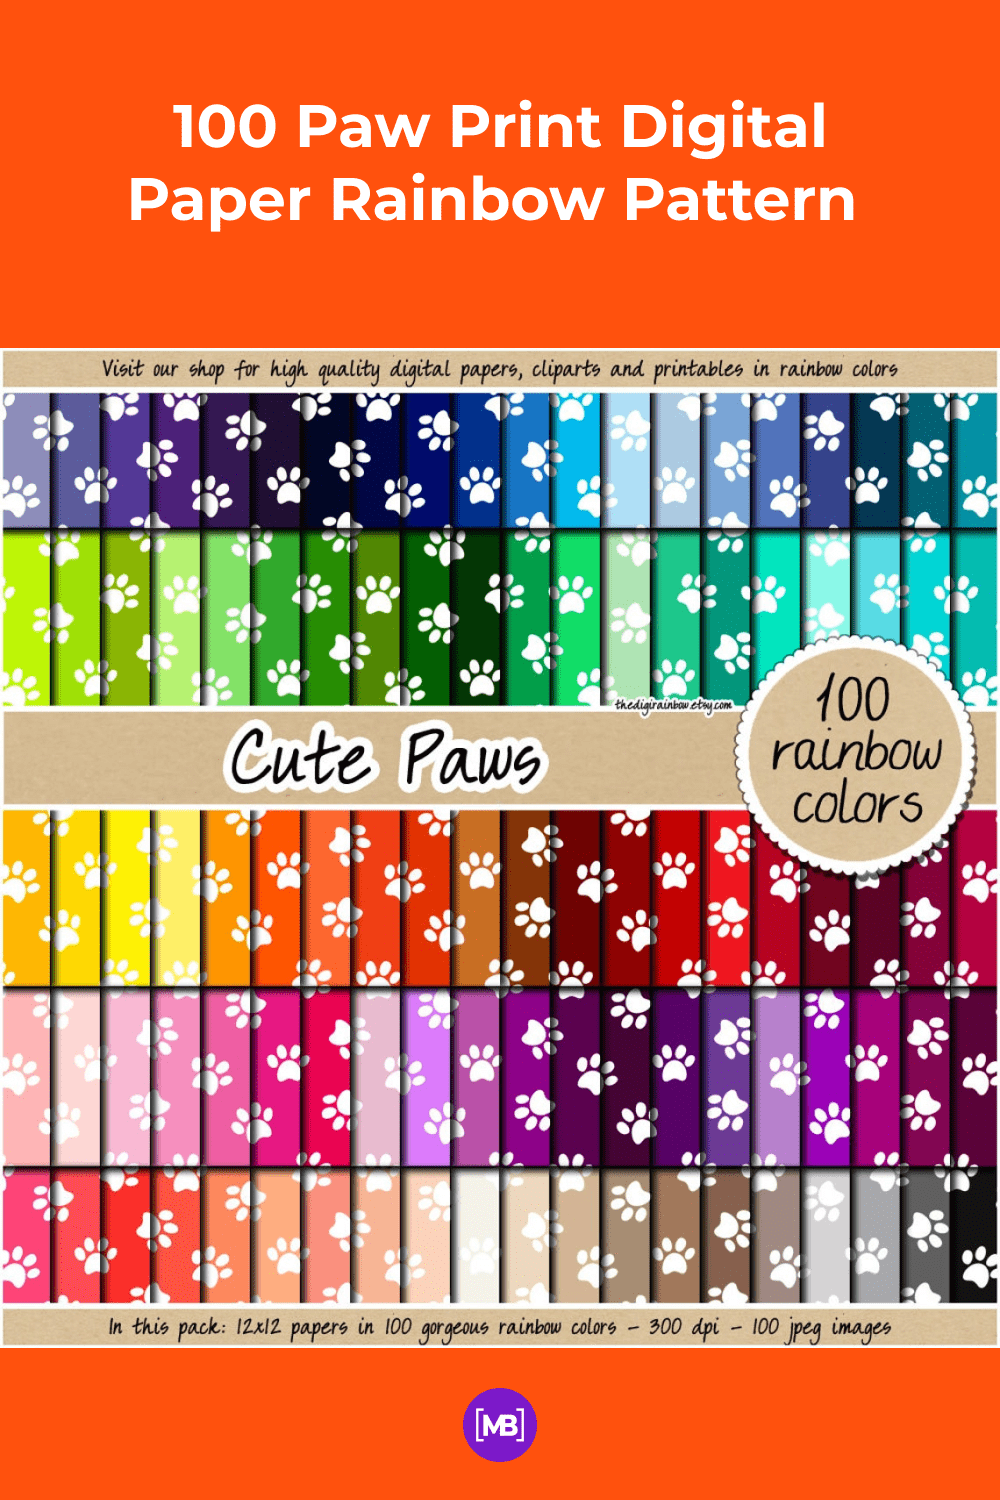 Paw Print Digital Paper Rainbow Pattern.